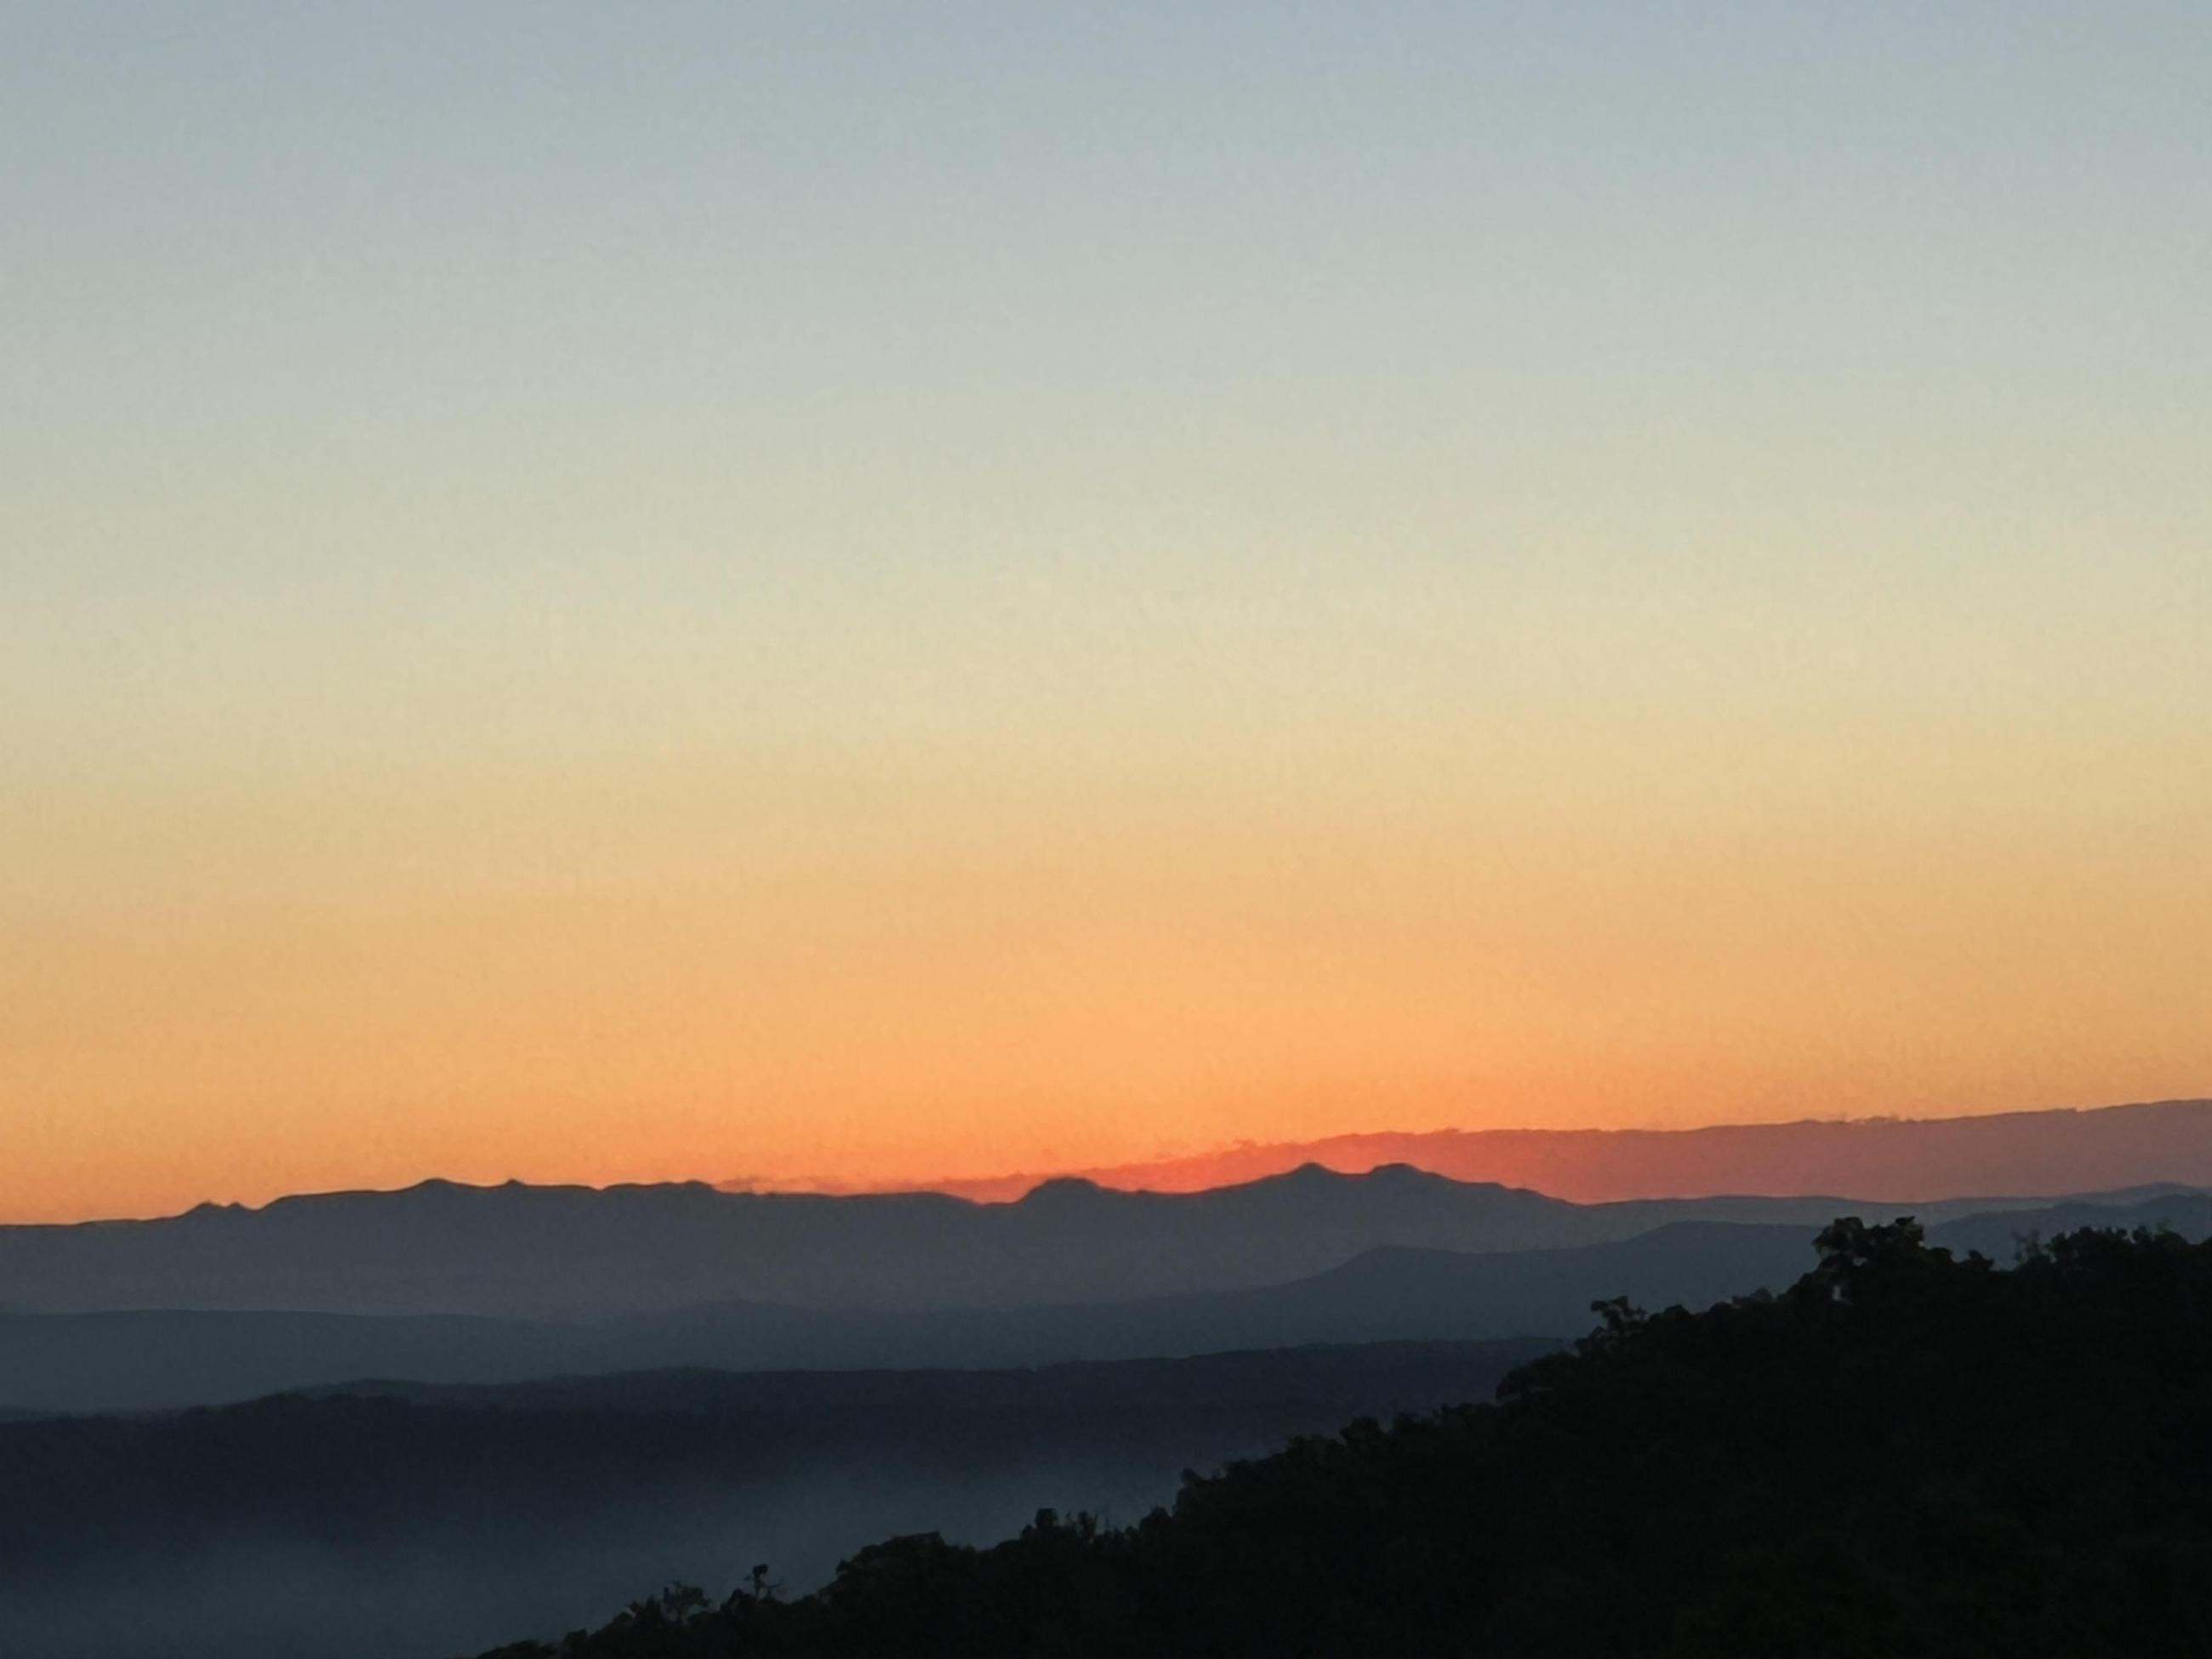 A hazy sunrise in a mountainous area.